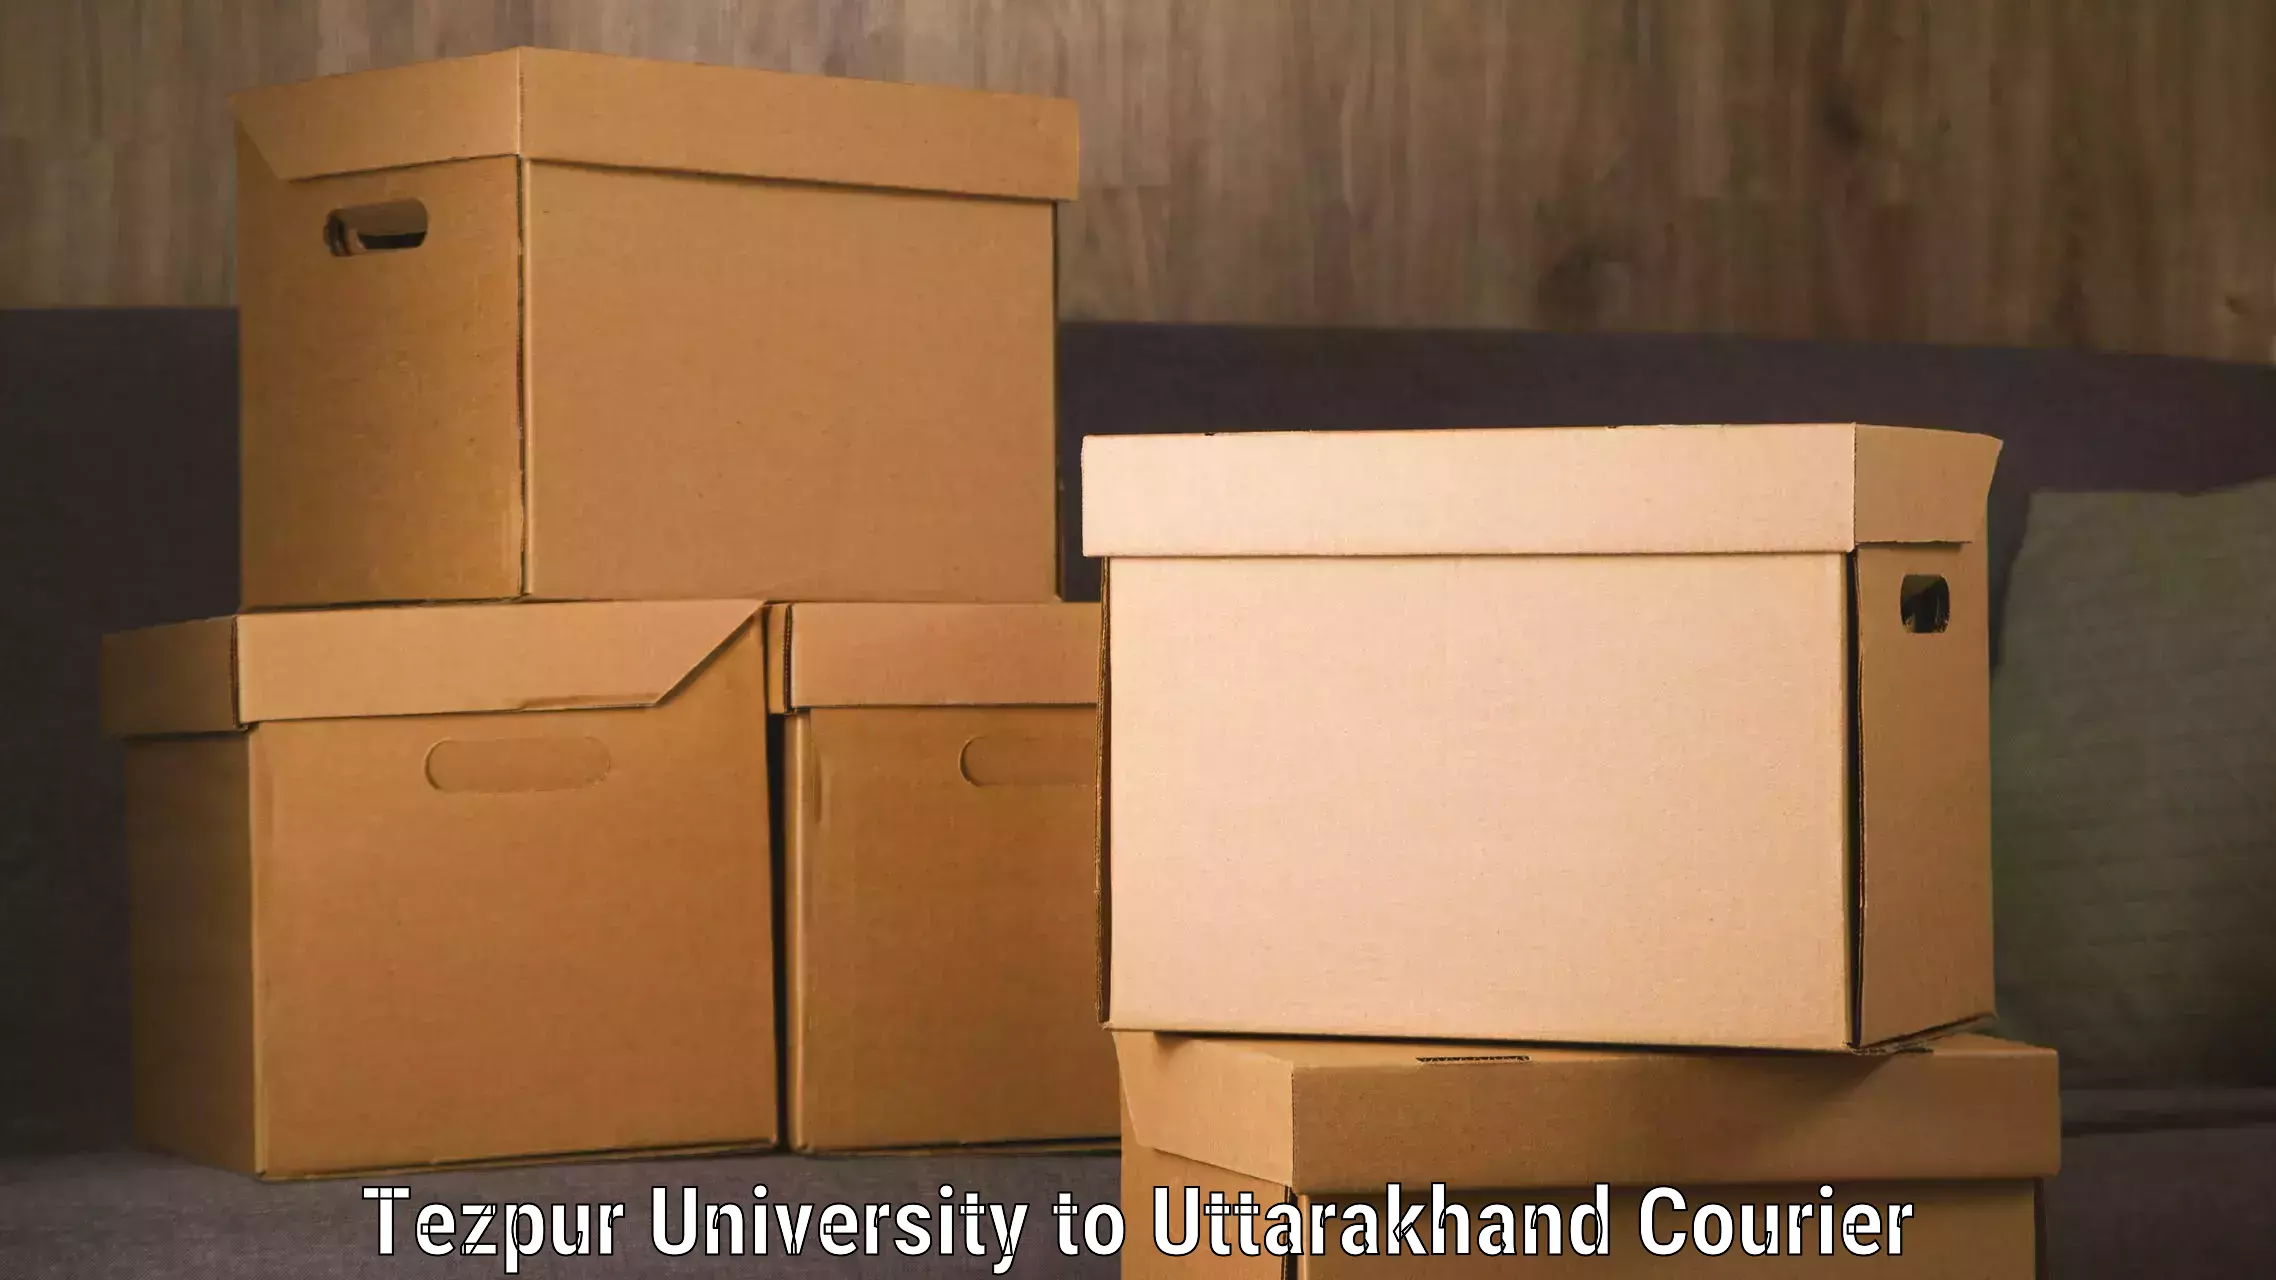 Same day luggage service Tezpur University to Rishikesh